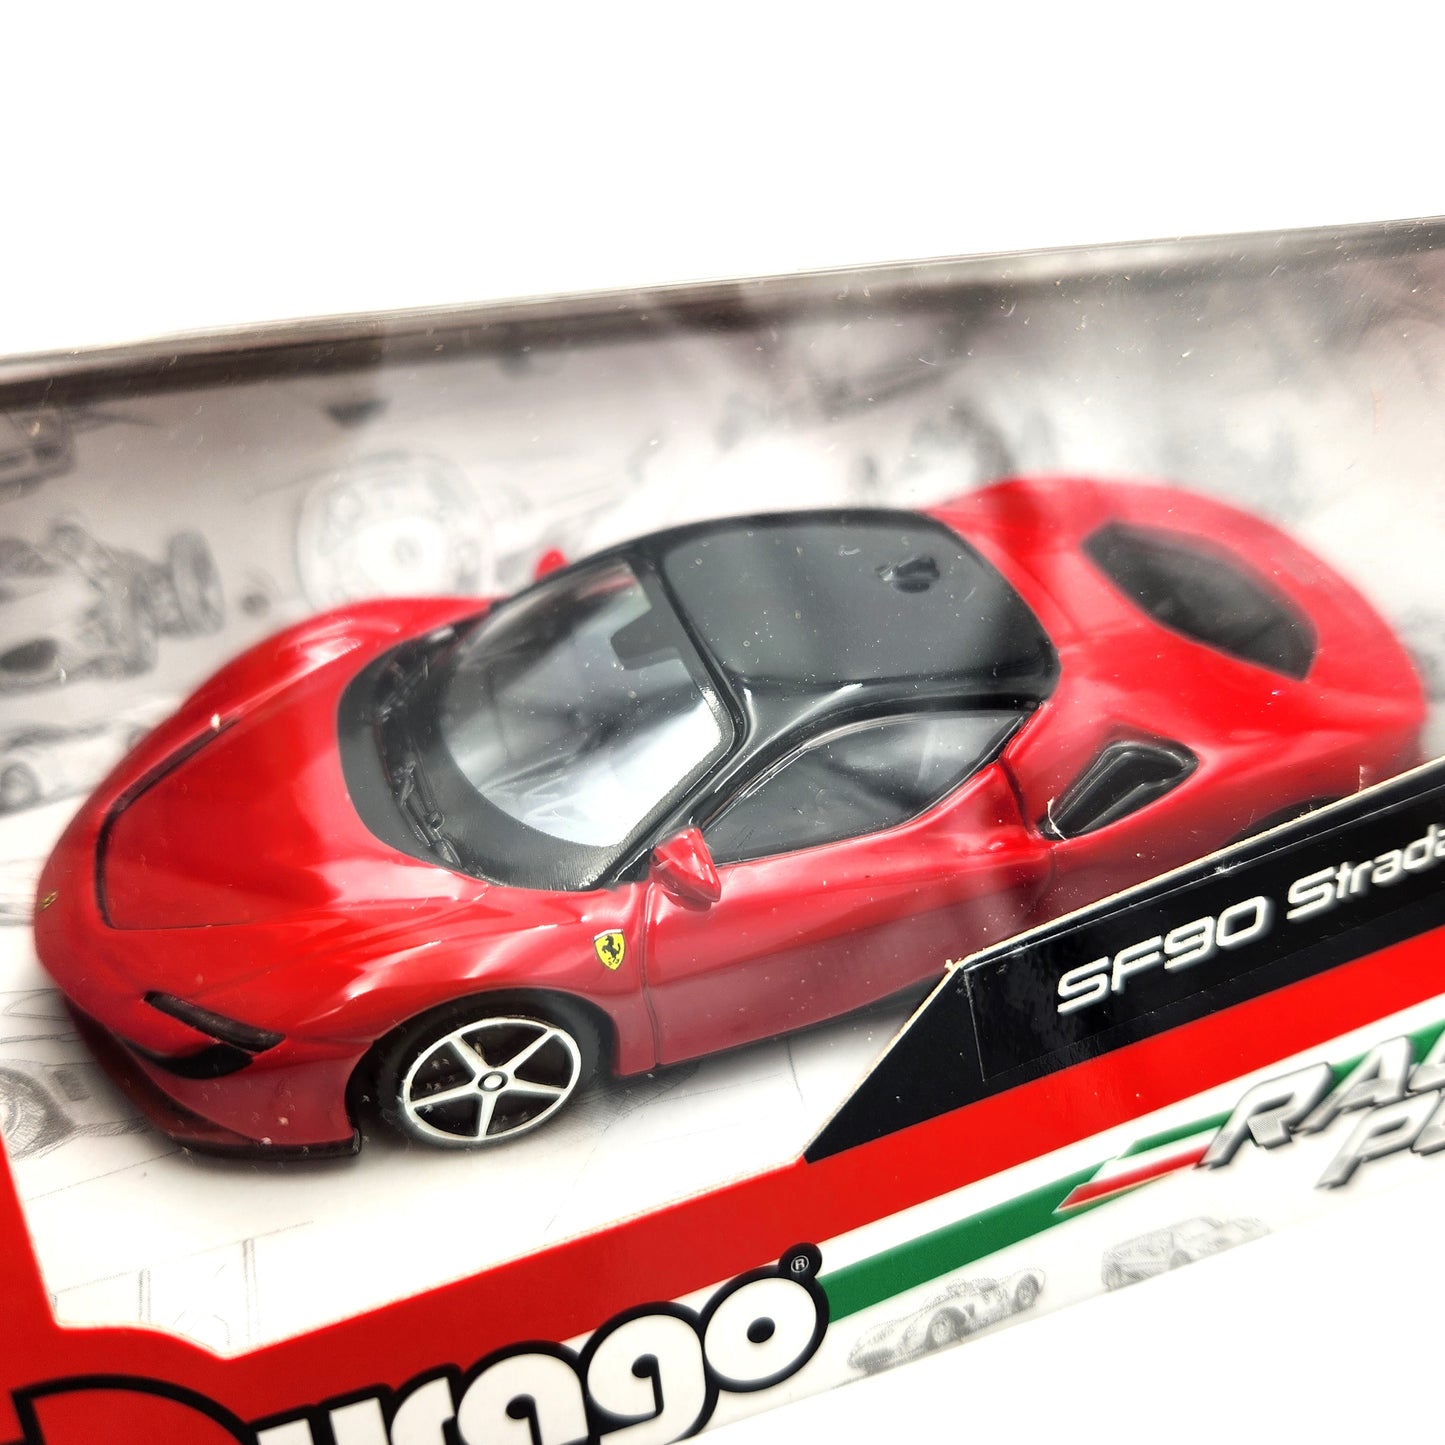 Bburago - Race and Play - Ferrari SF90 Stradale (Red)